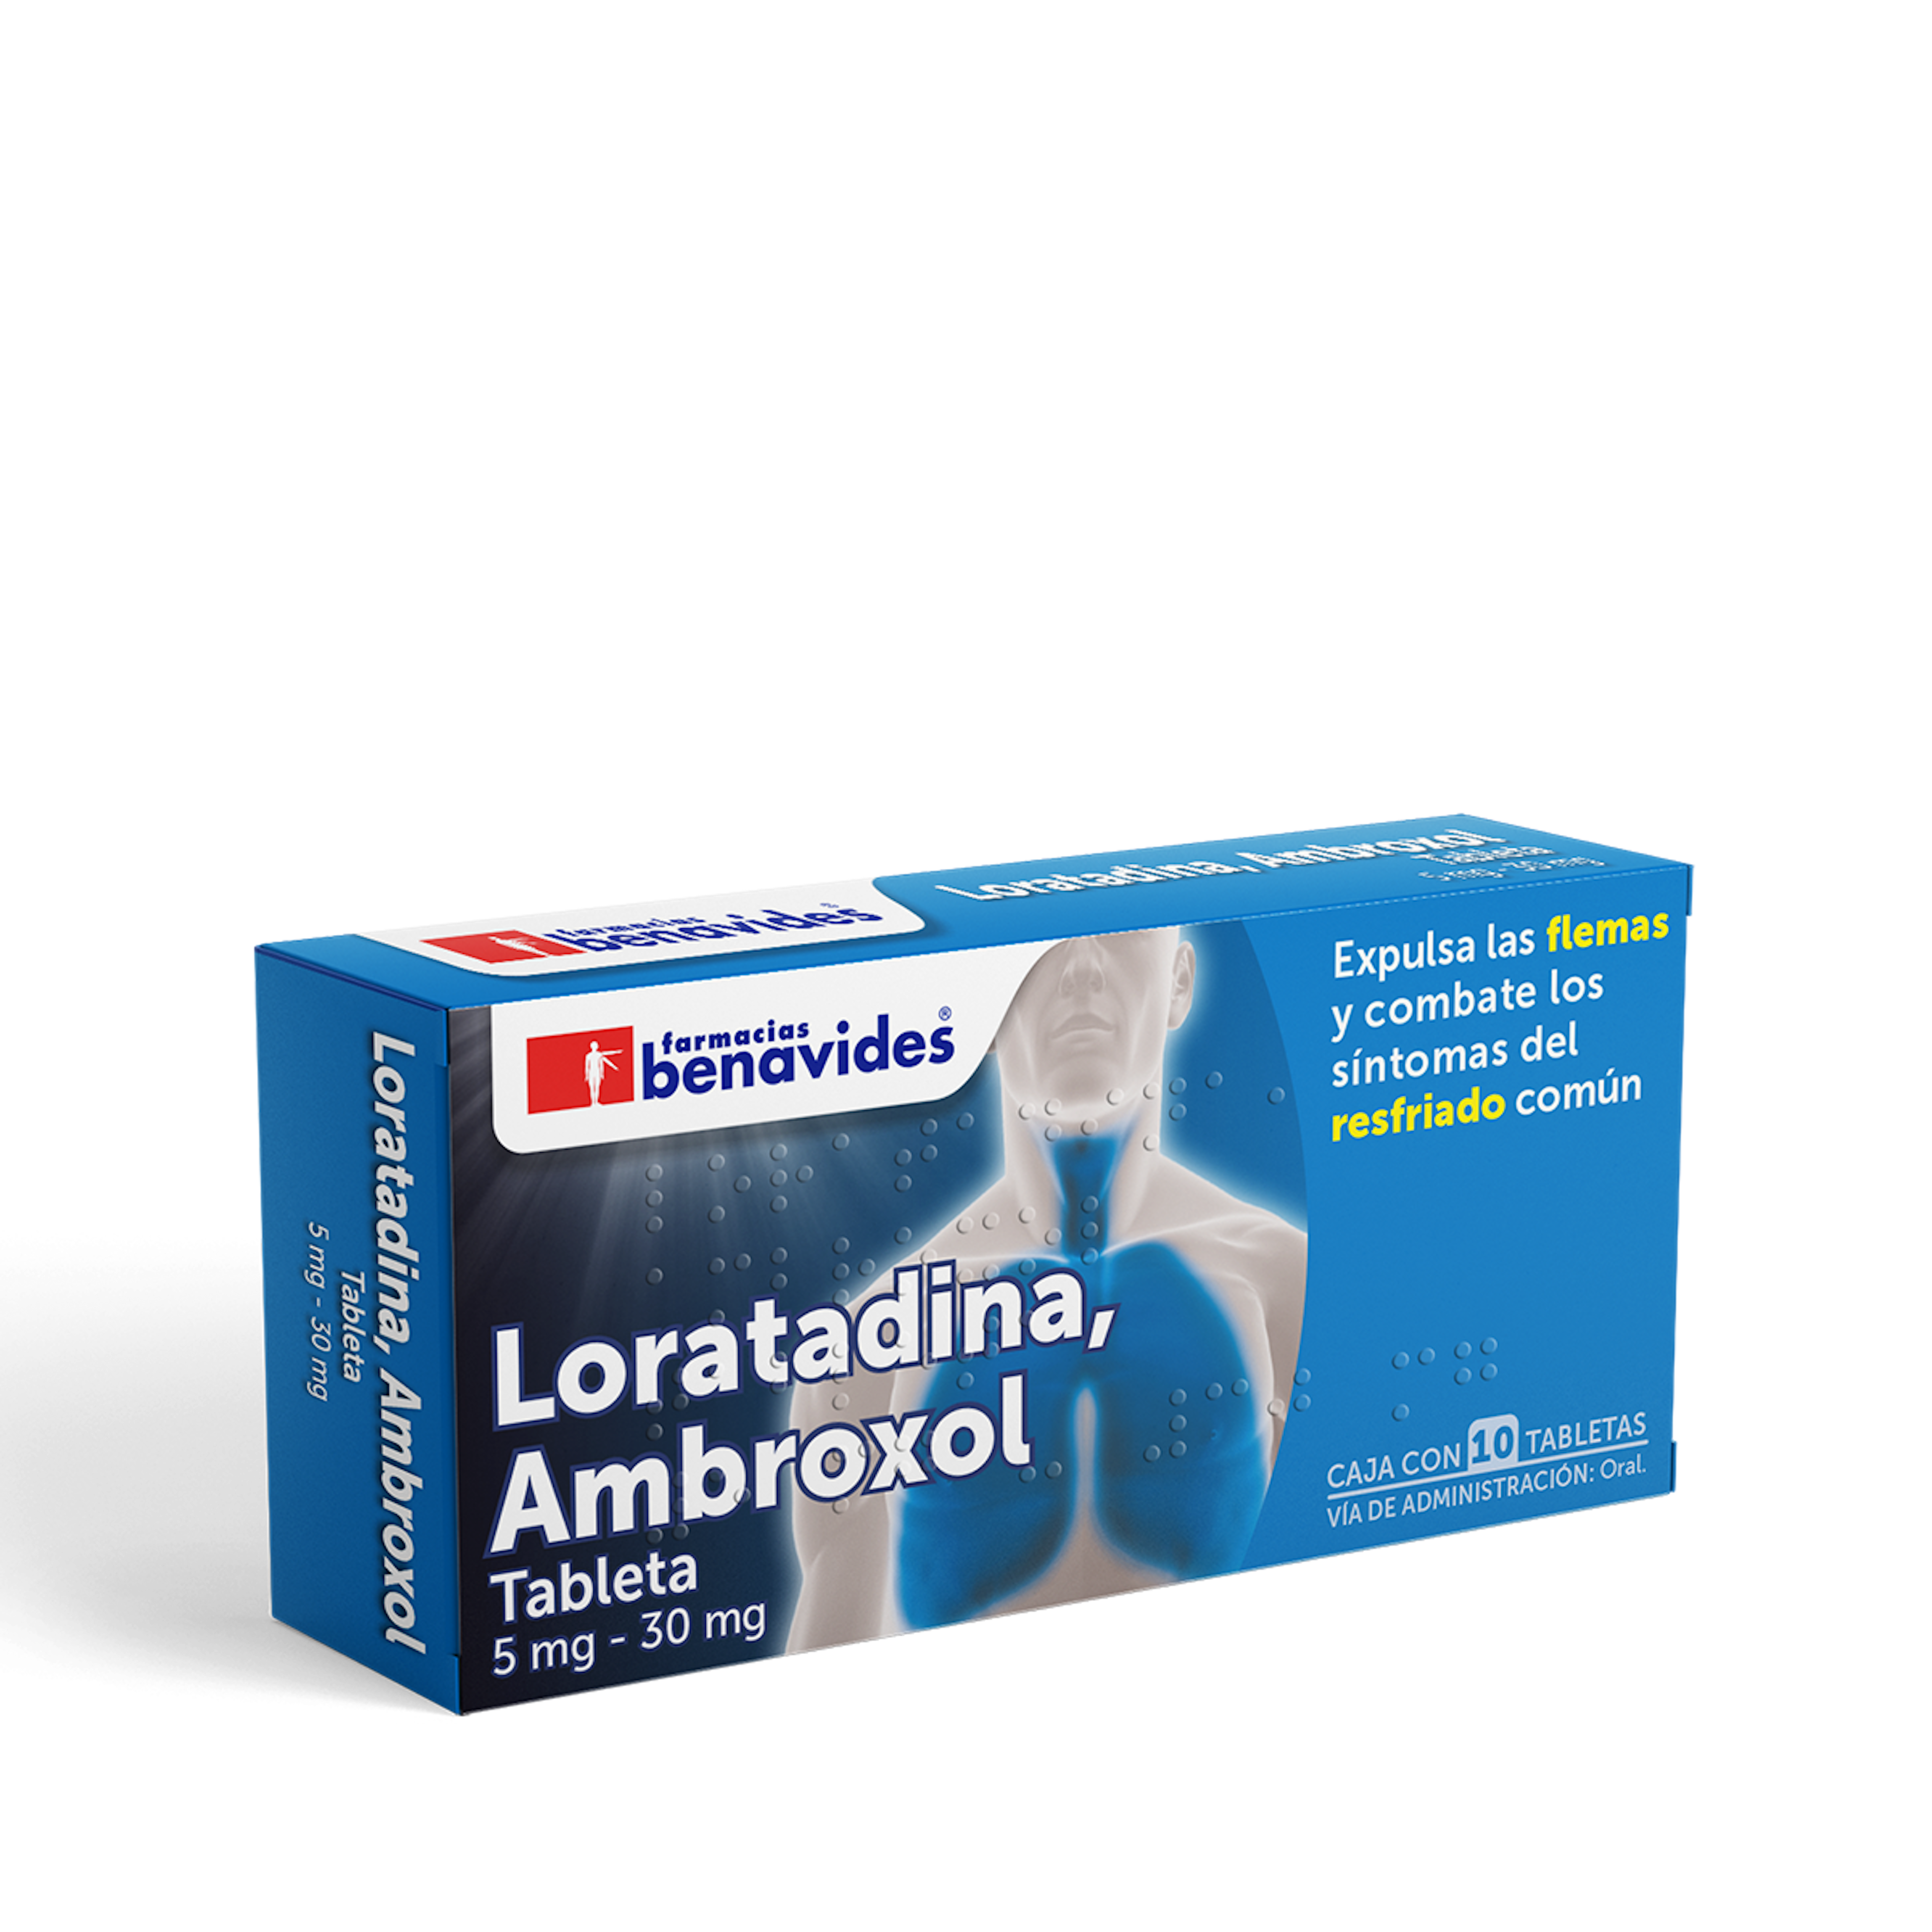 Loratadina / Ambroxol